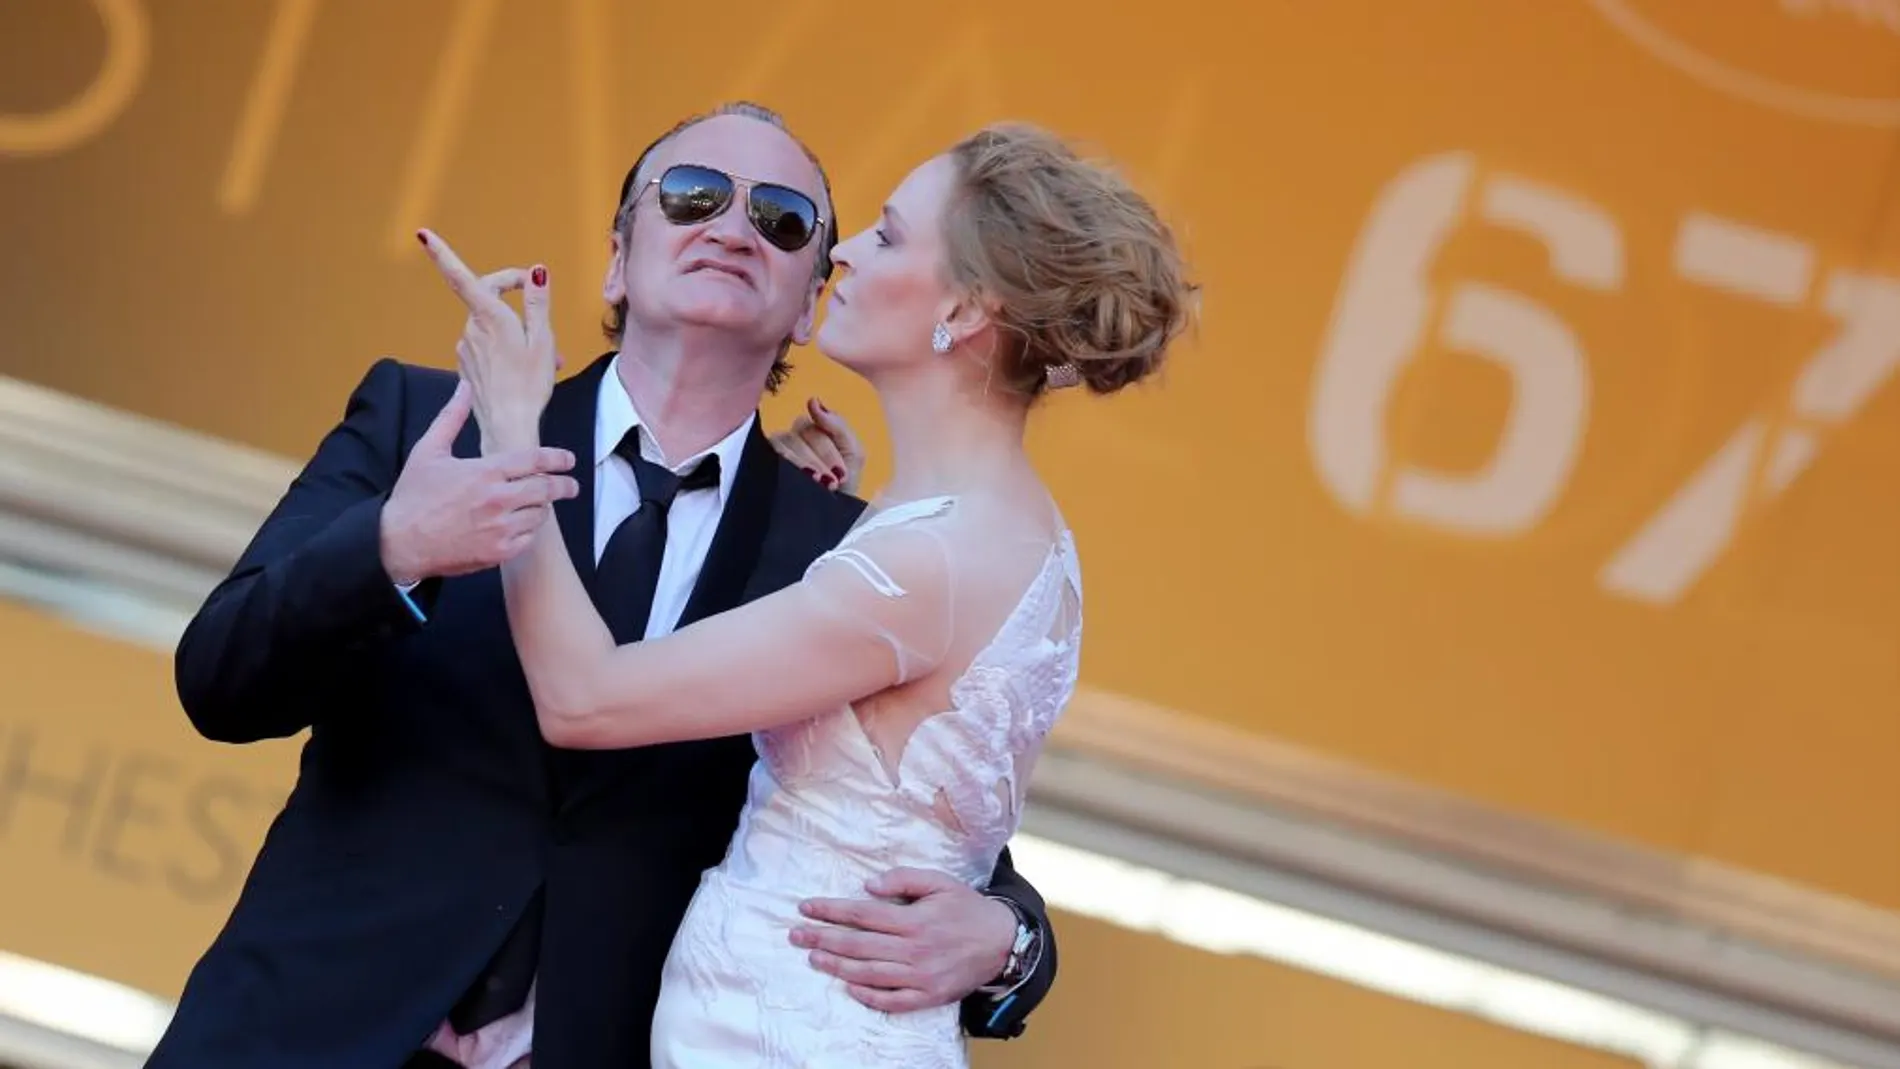 Uma Thurman y Quentin Tarantino, en Cannes.